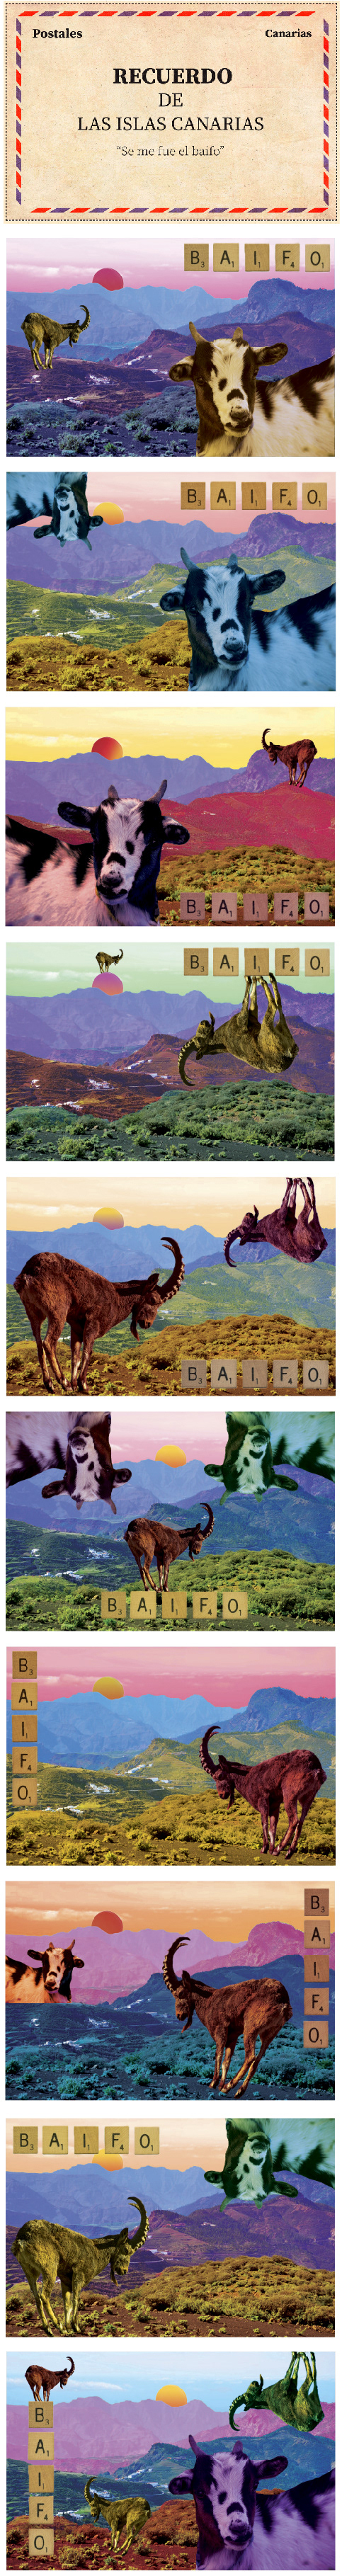 Collage Postales Canarias